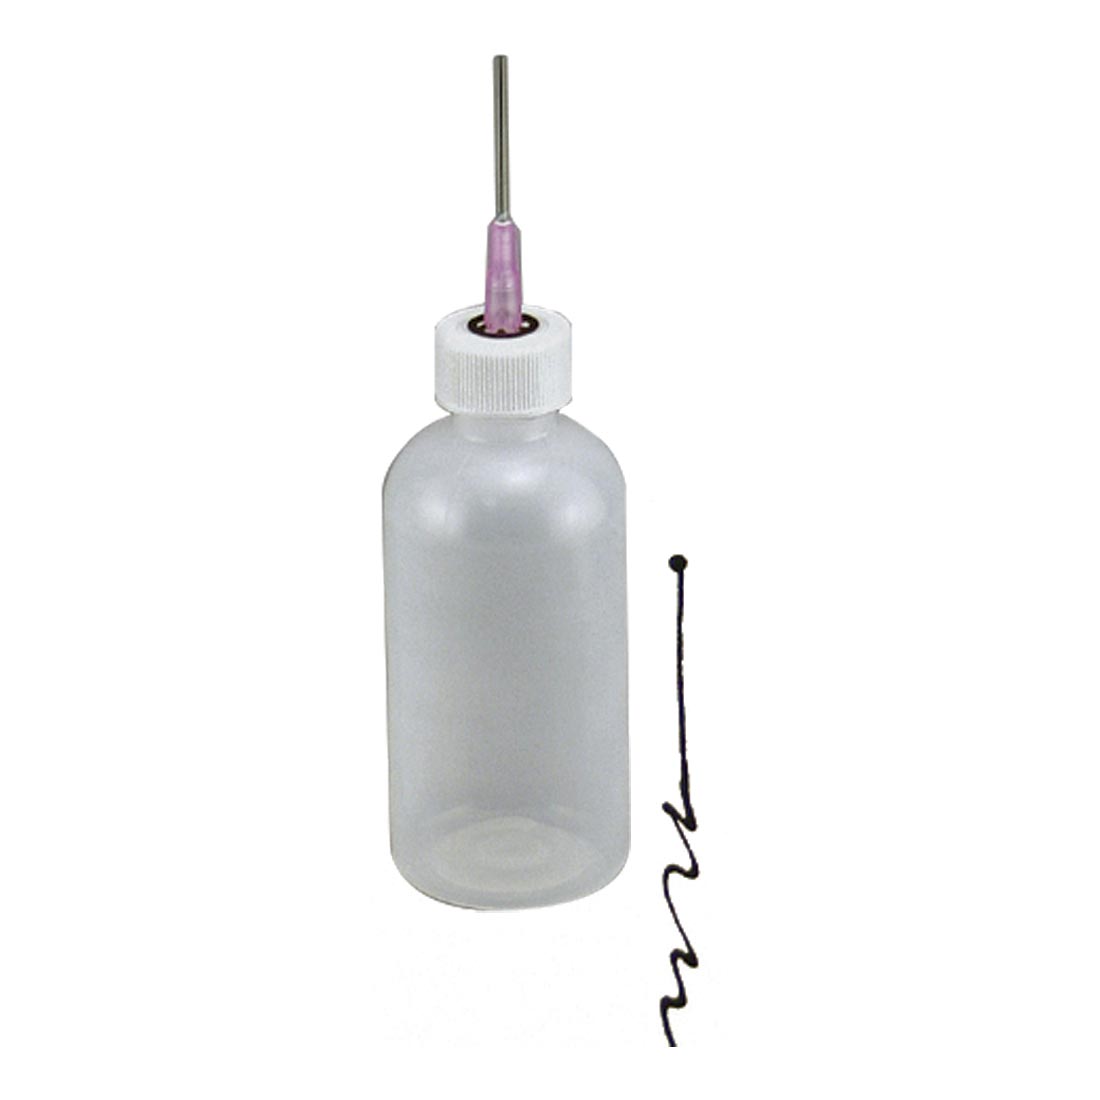 empty glaze applicator bottle with a sample line drawn